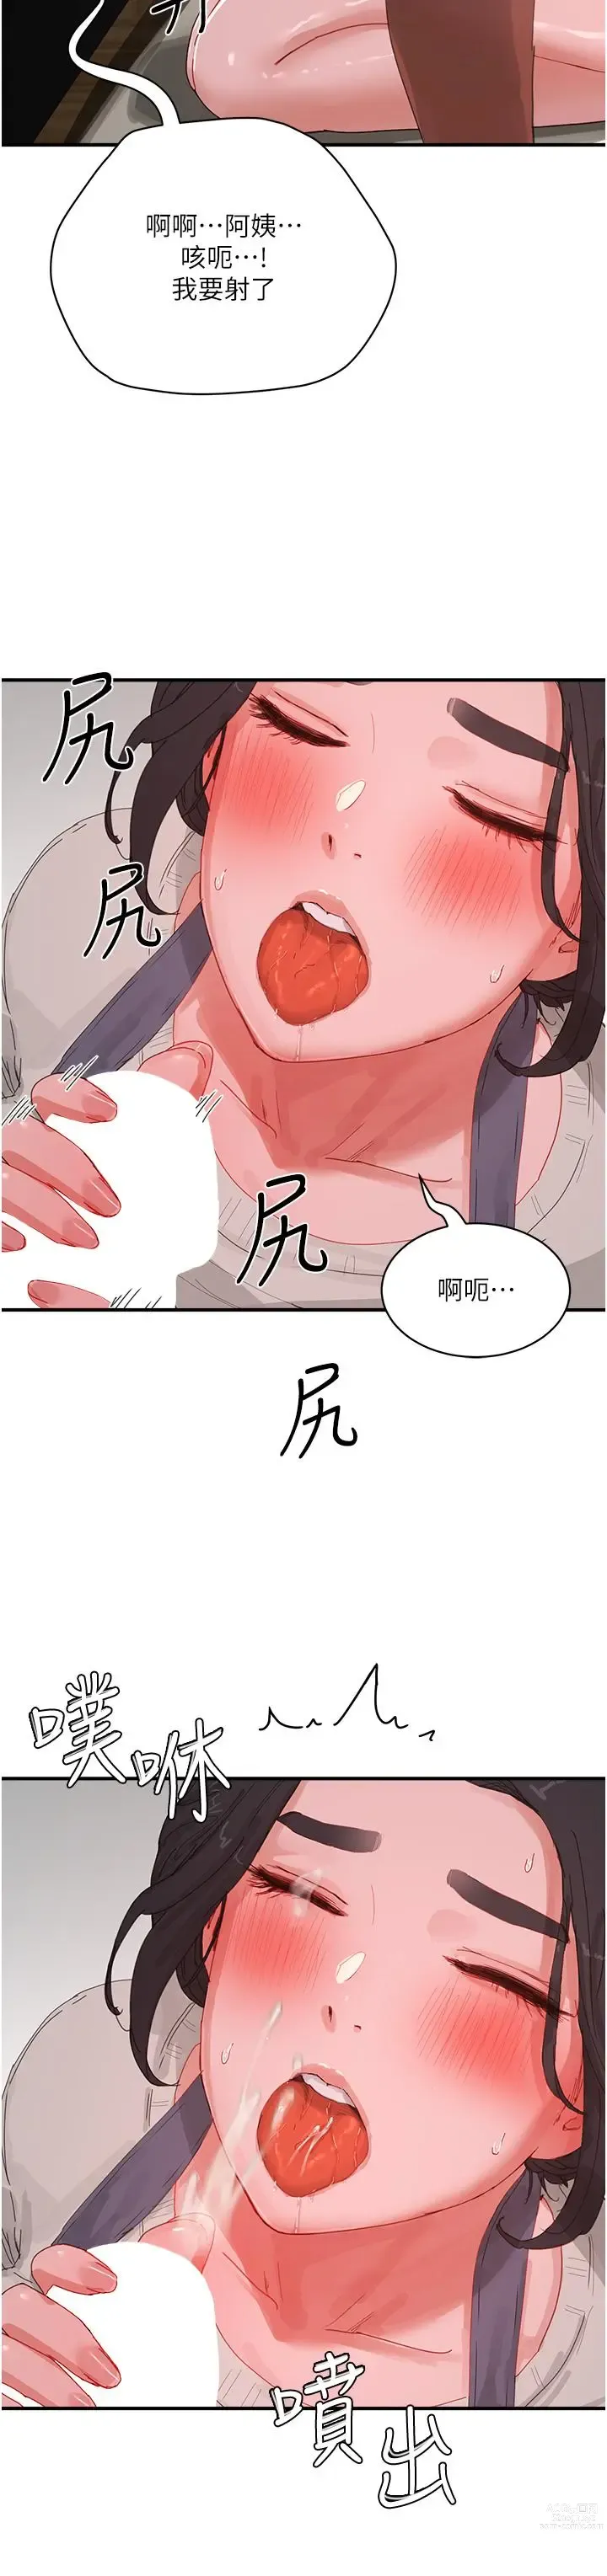 Page 562 of manga 夏日深处/Summer of Love 61-76